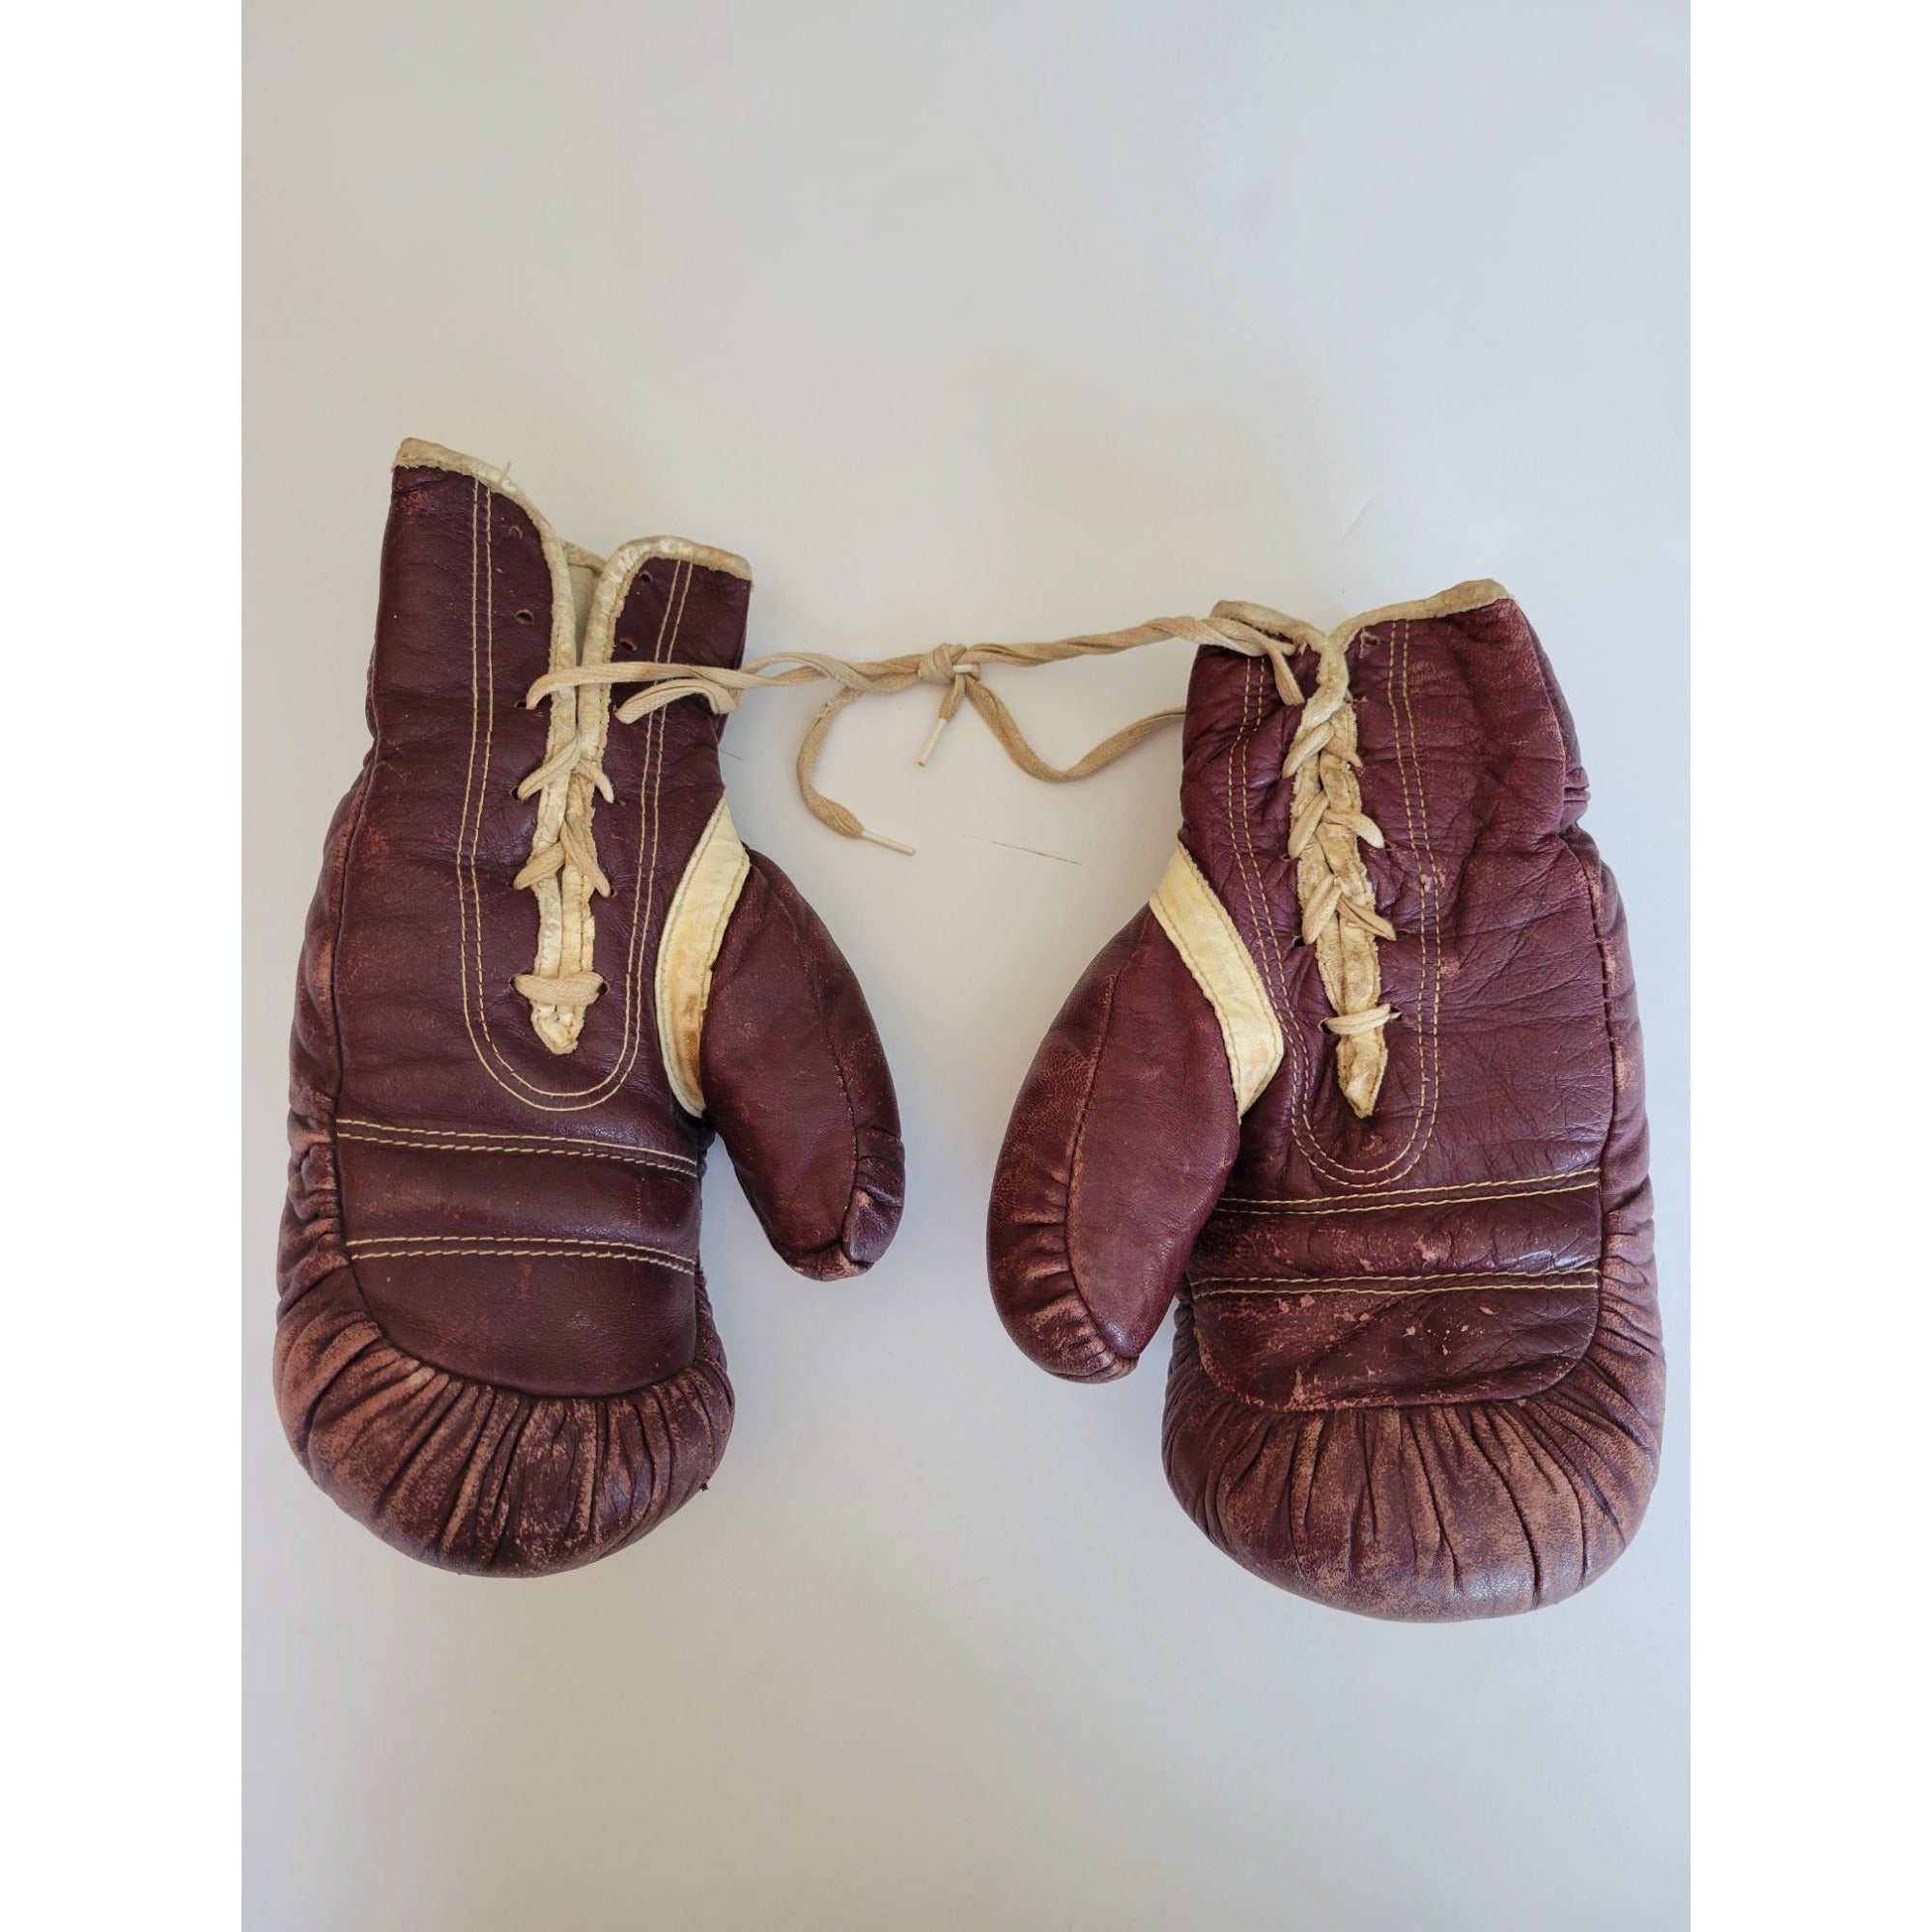 Jack Dempsey Everlast vintage pair of leather gloves signed